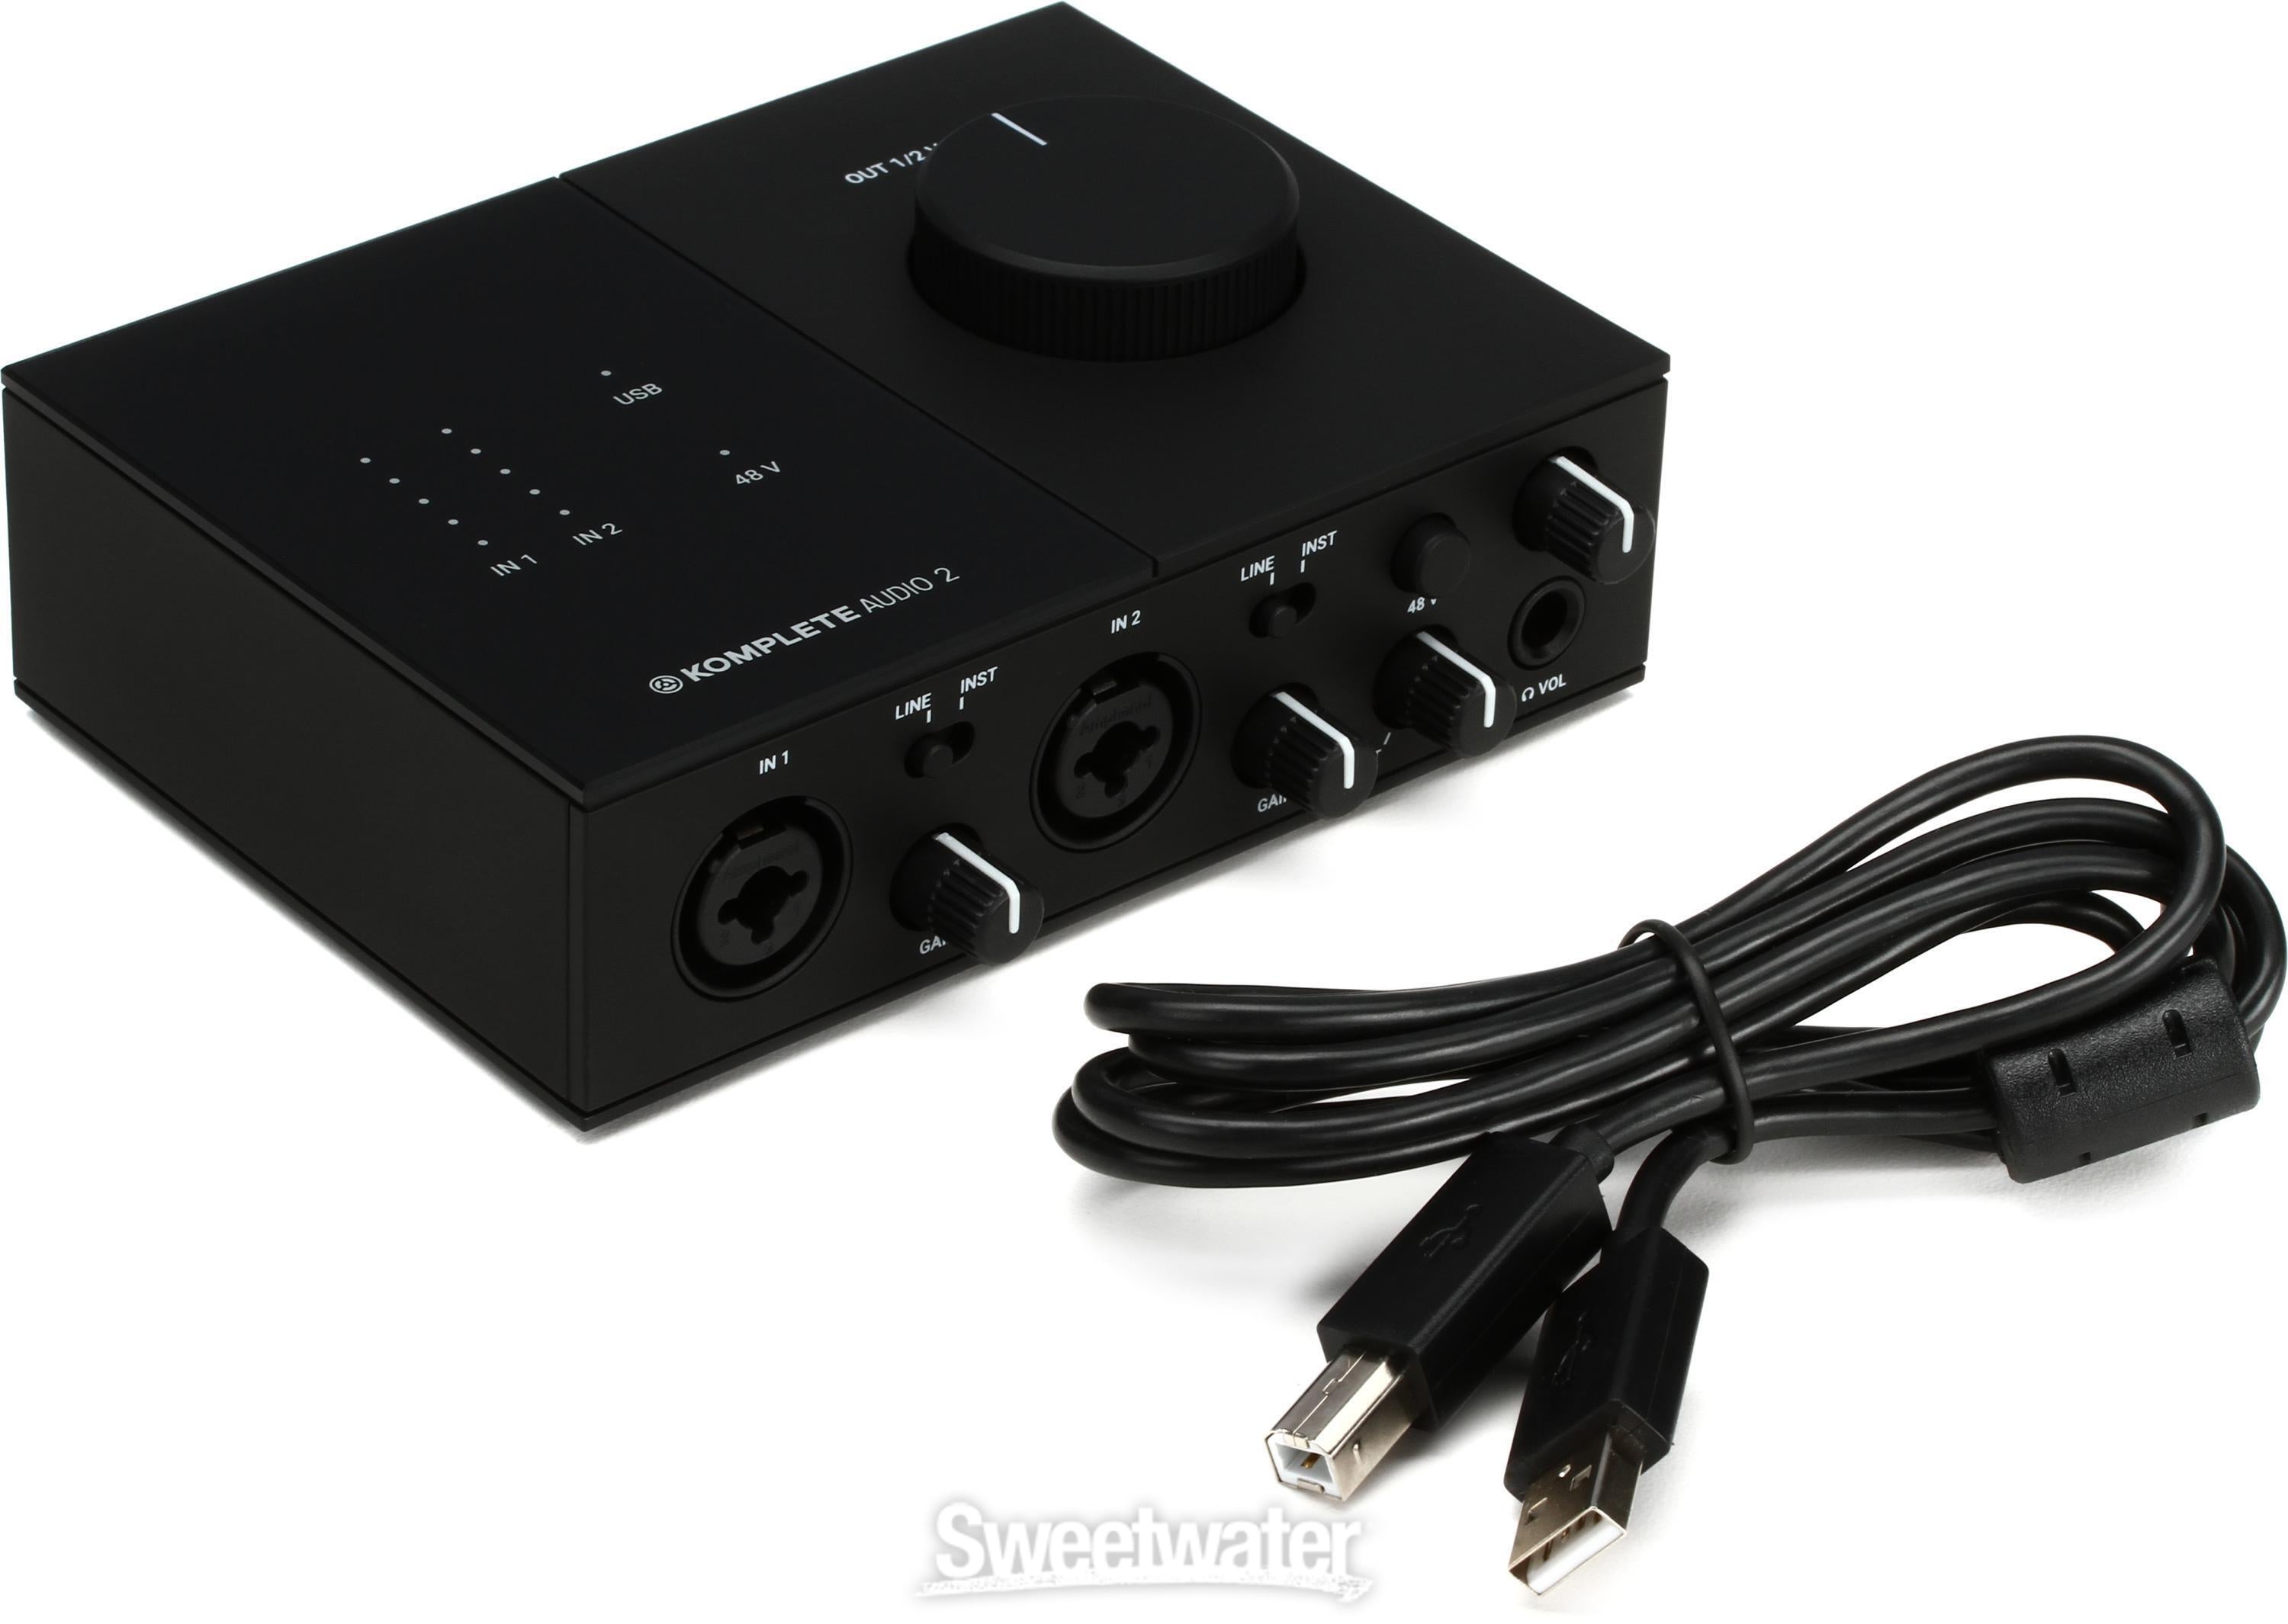 Komplete Audio 2 USB Audio Interface - Sweetwater